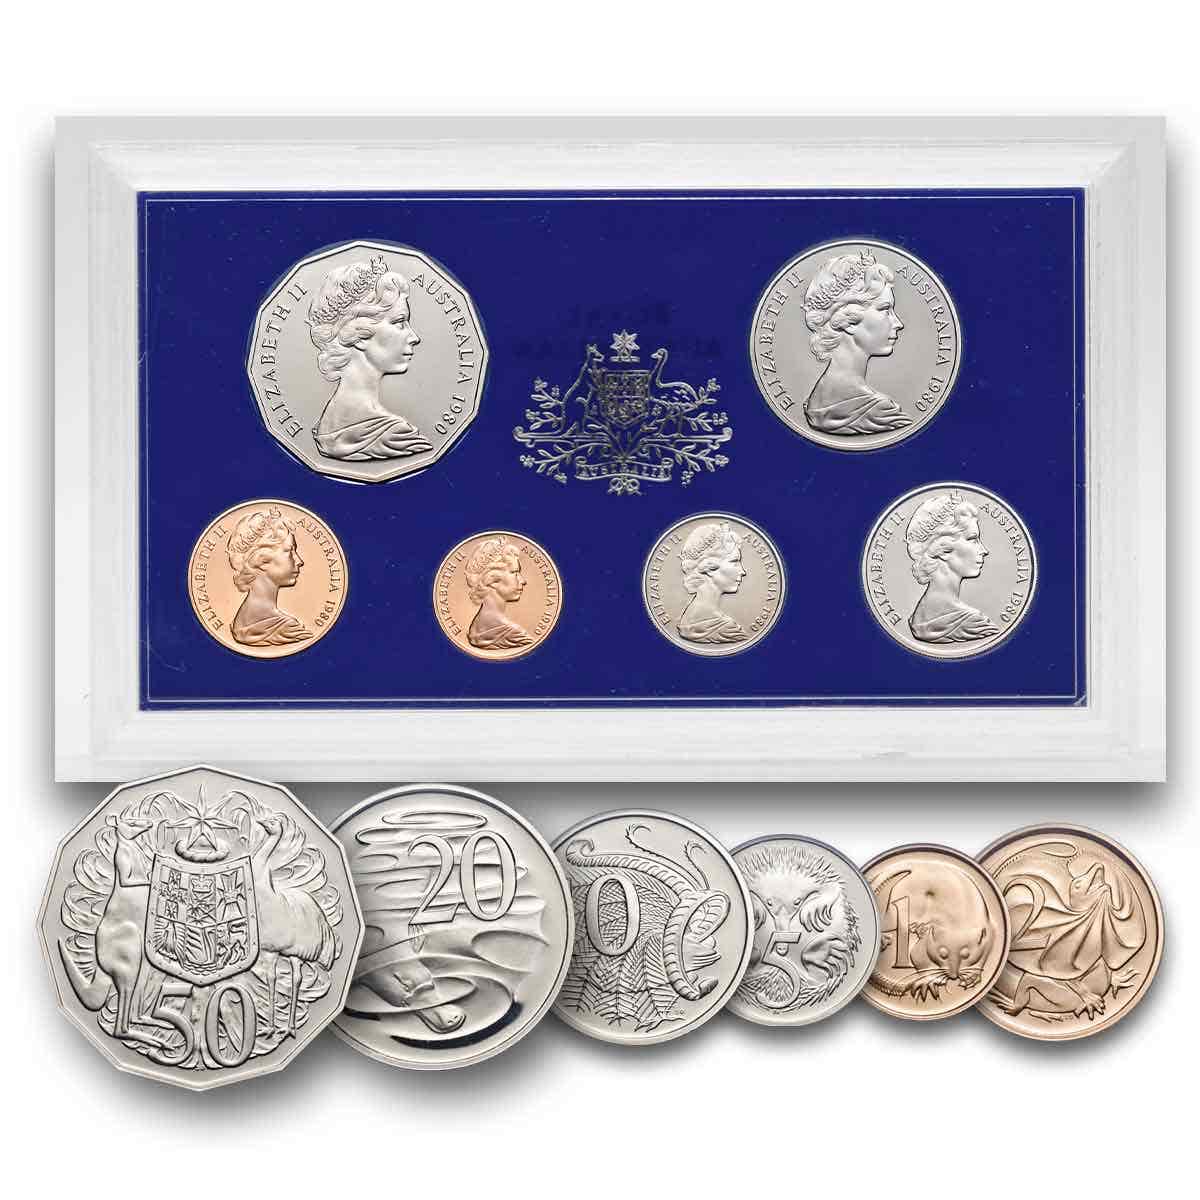 Australia 1980 6-Coin Proof Set